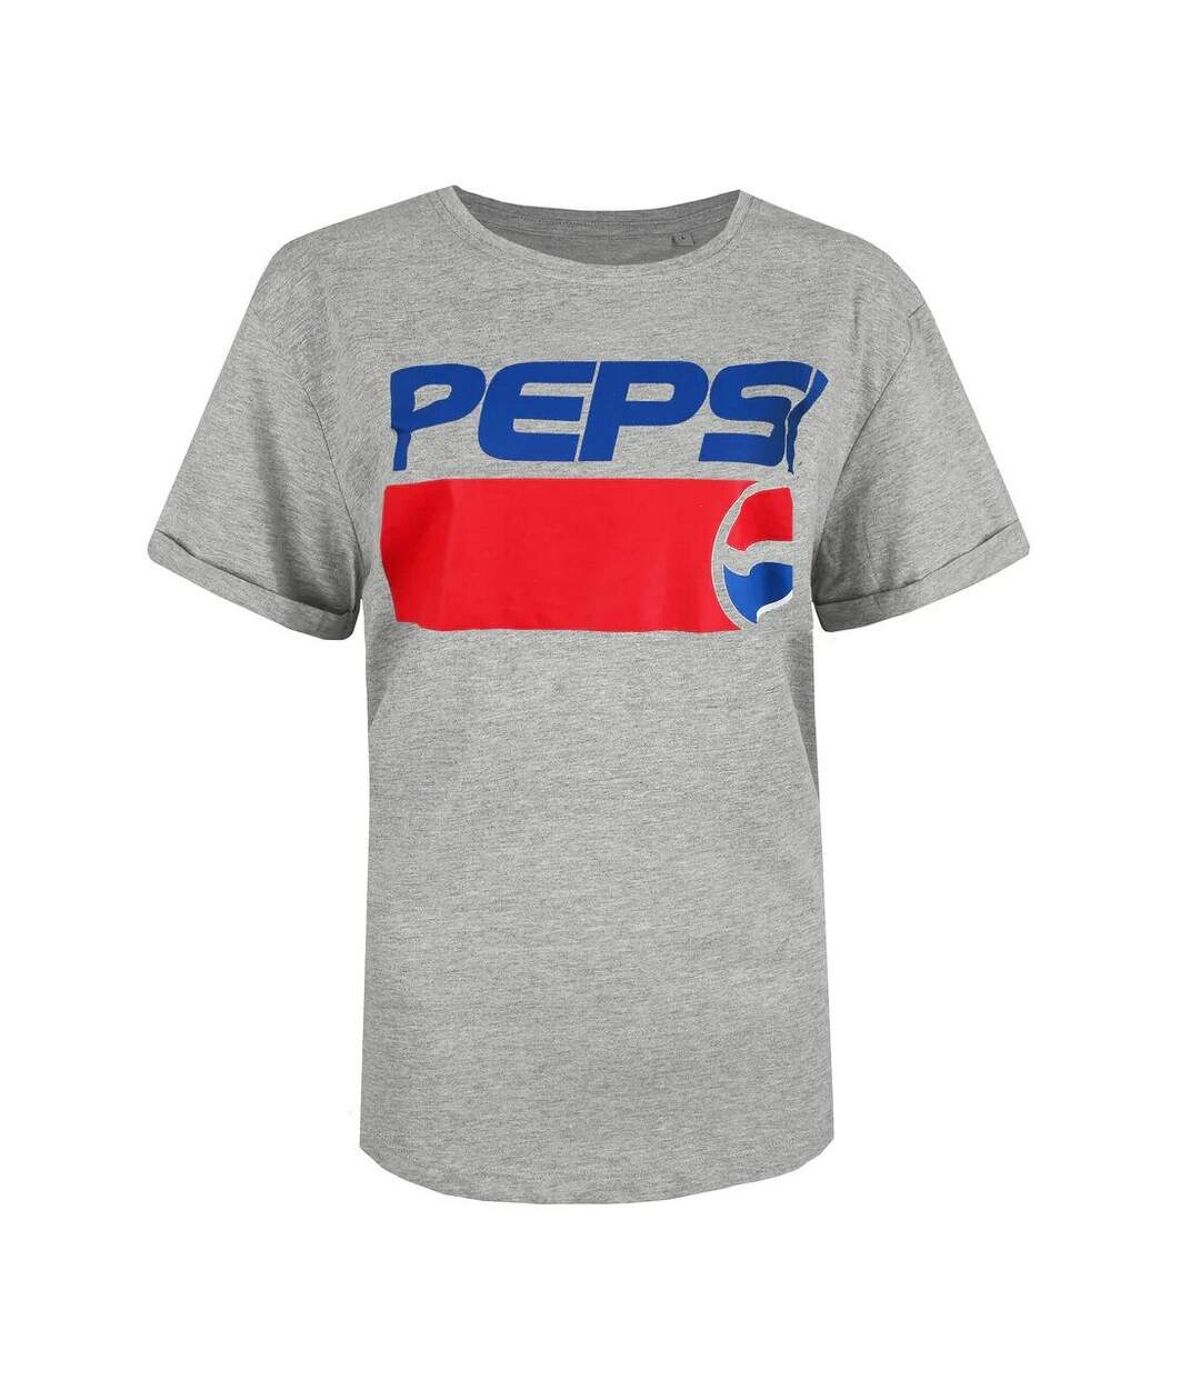 Pepsi Womens/Ladies 1991 T-Shirt (Sports Grey/Blue/Red)